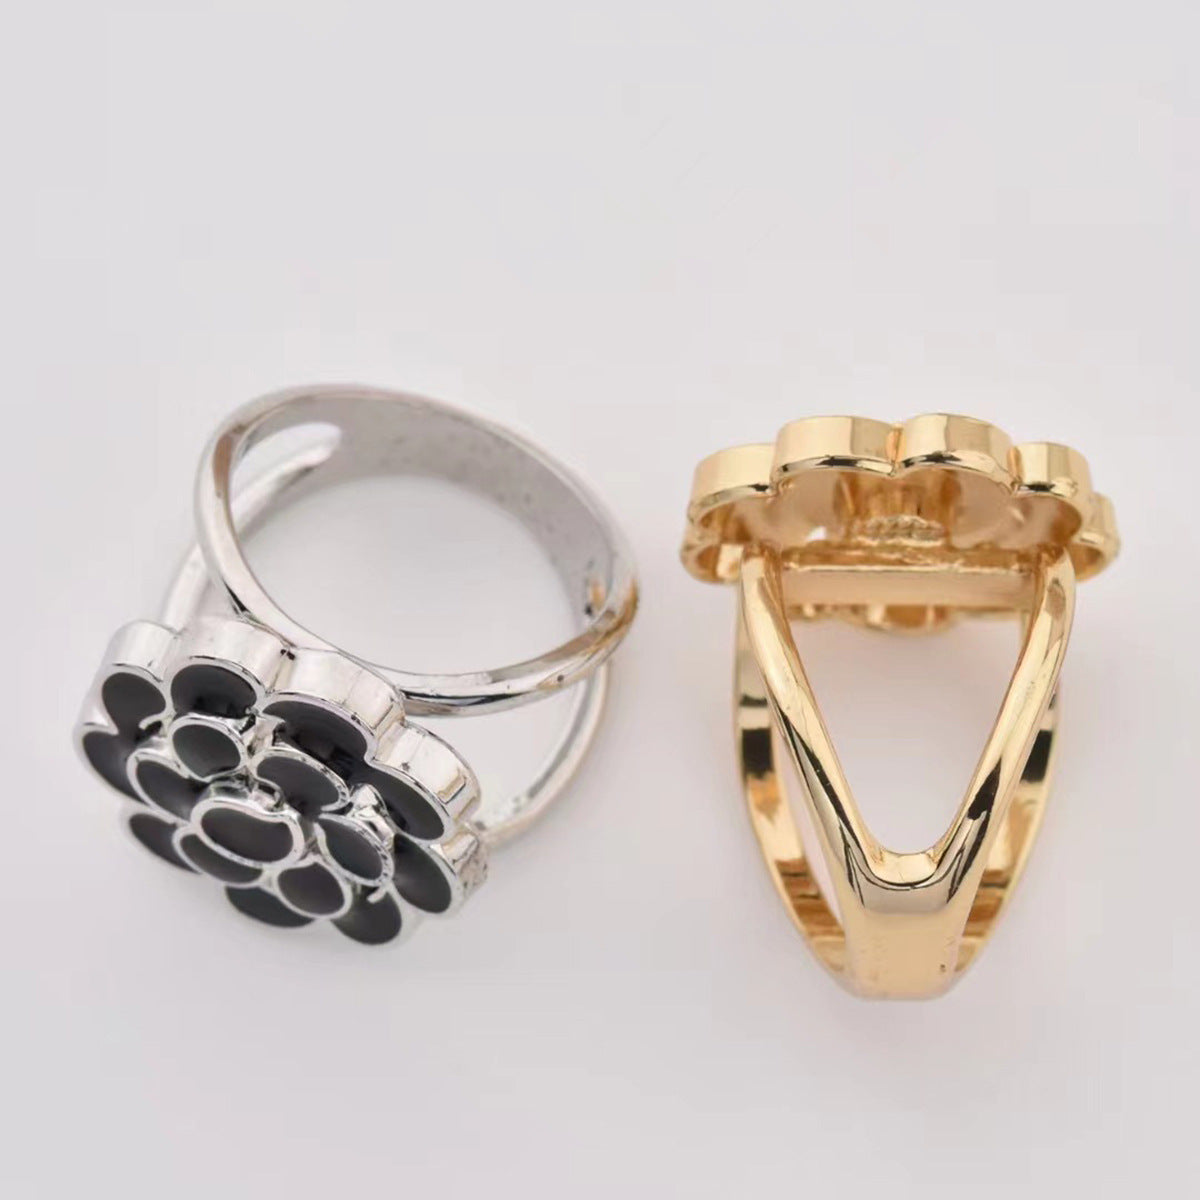 FSASR-007 Jewelry Wholesale Scarf Buckle Ring